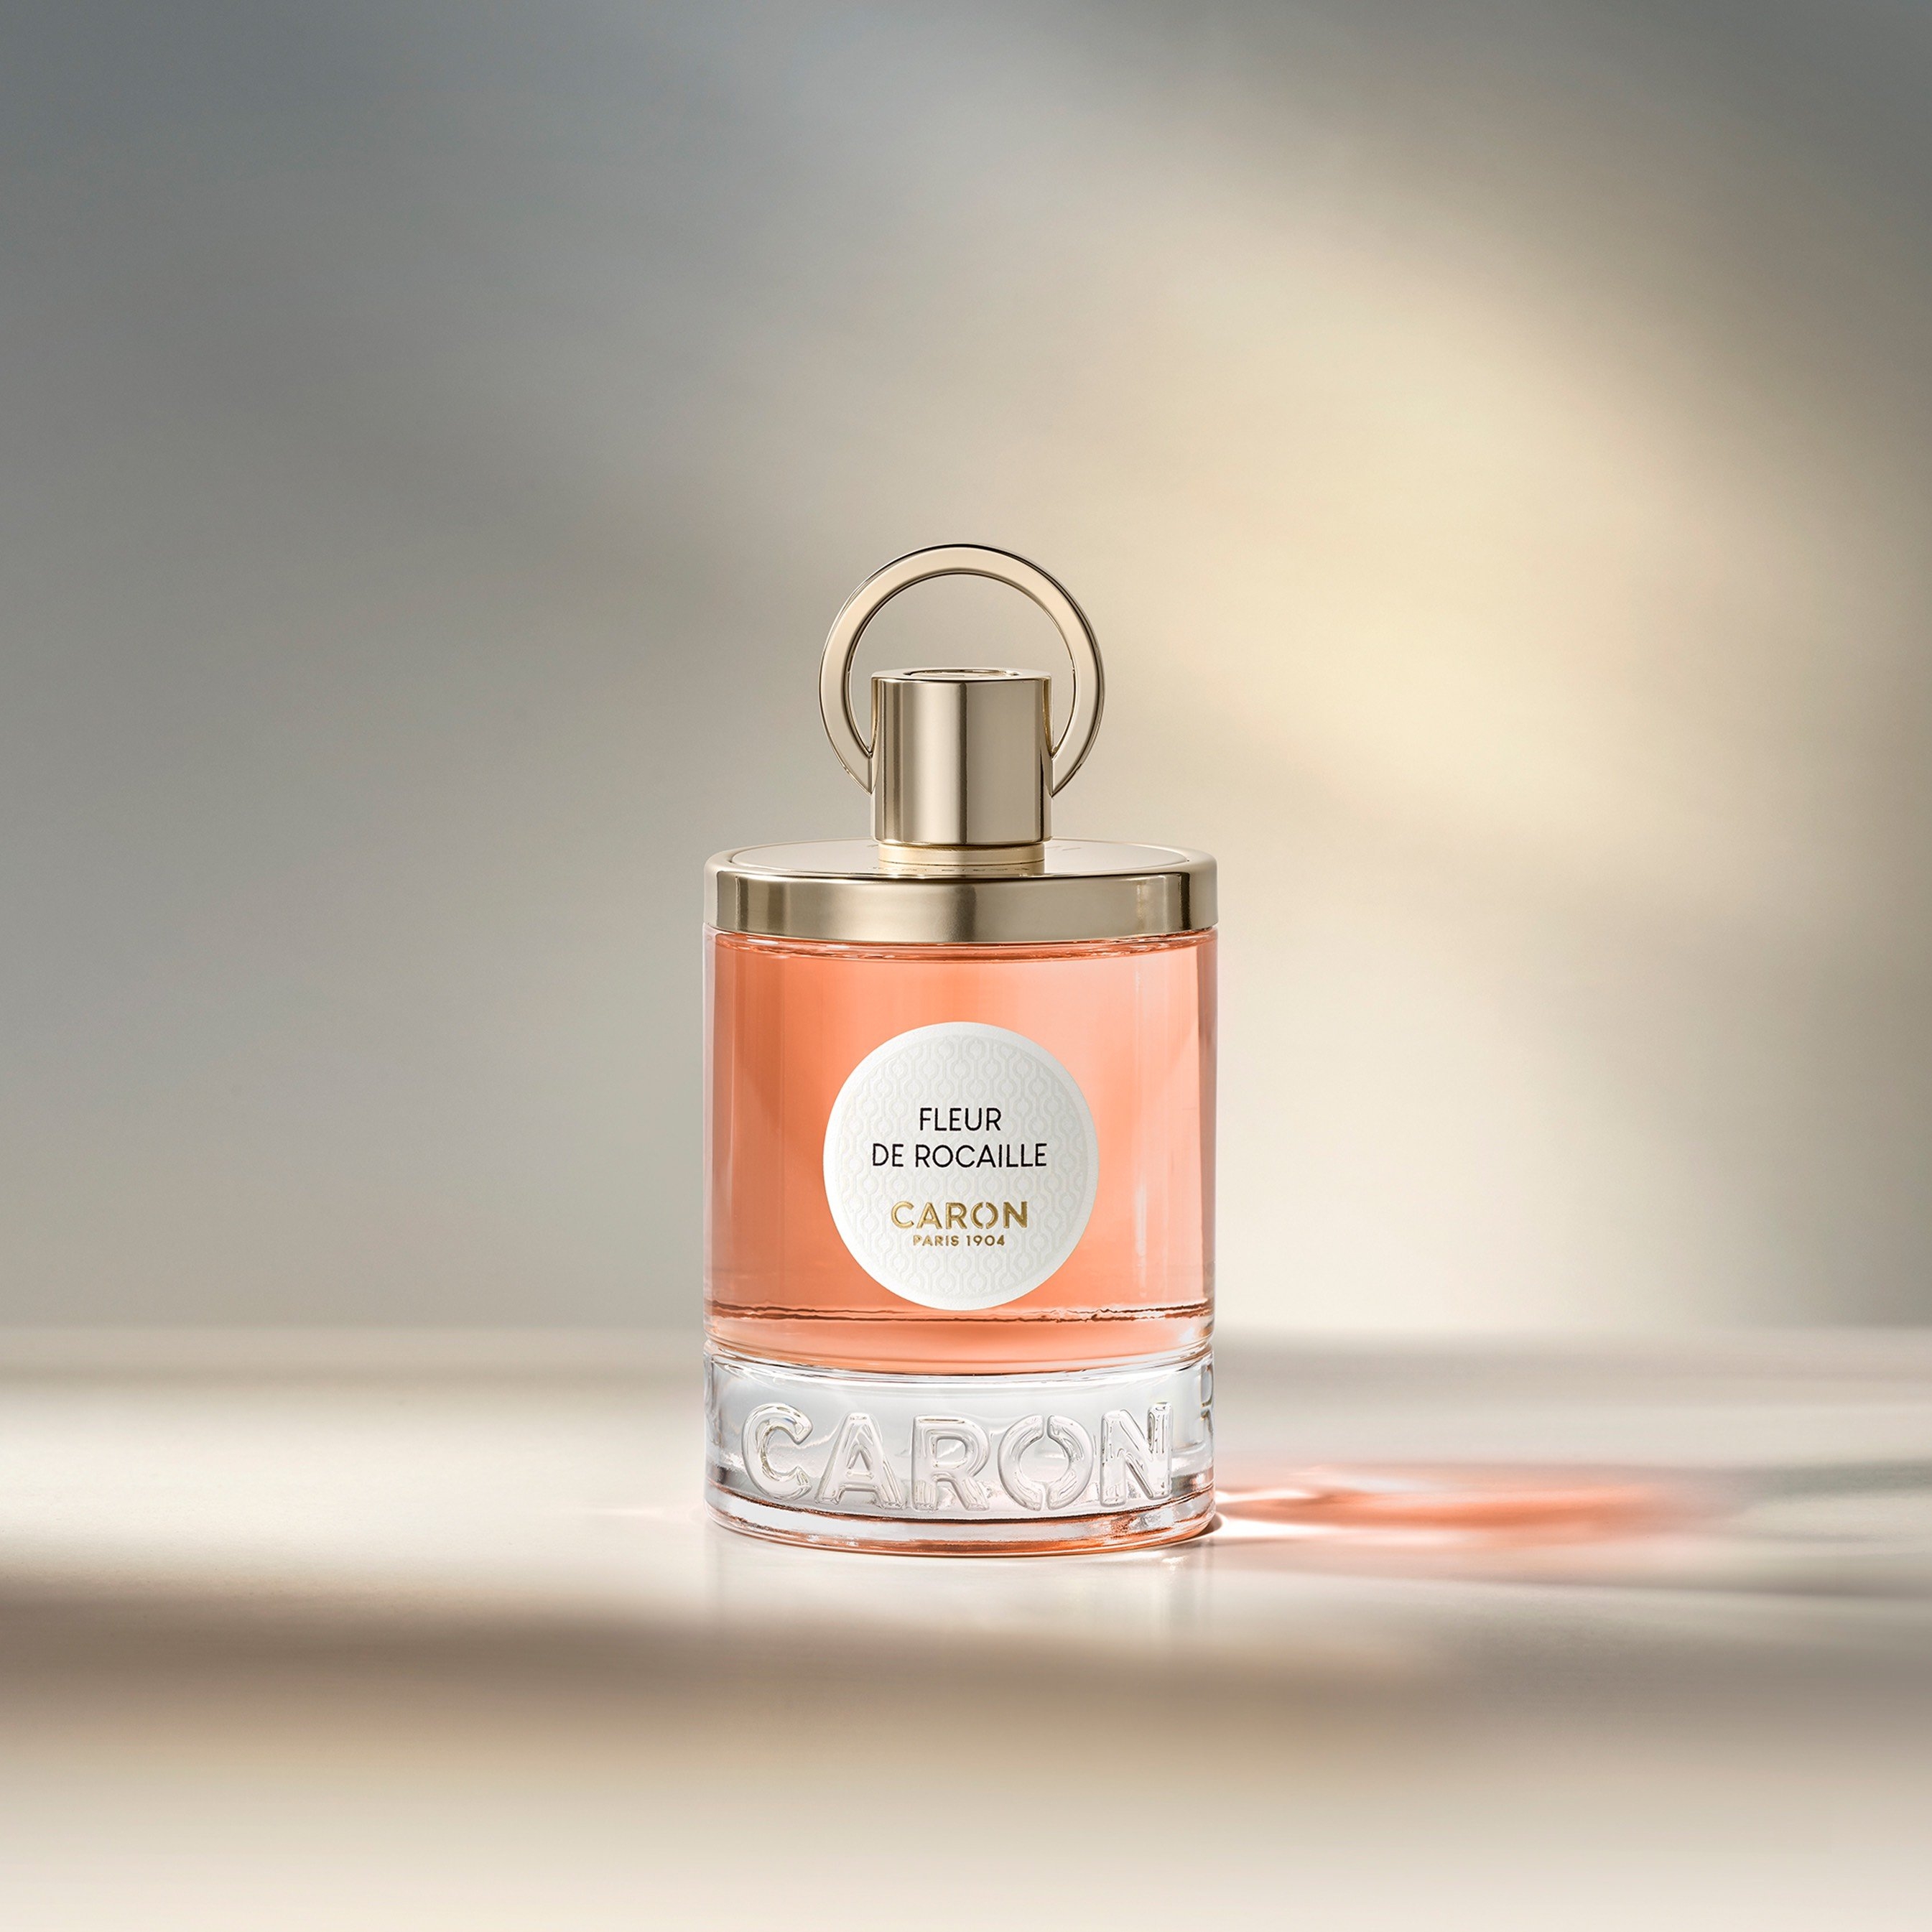 Caron - Fleur de Rocaille 100 ml | Perfume Lounge